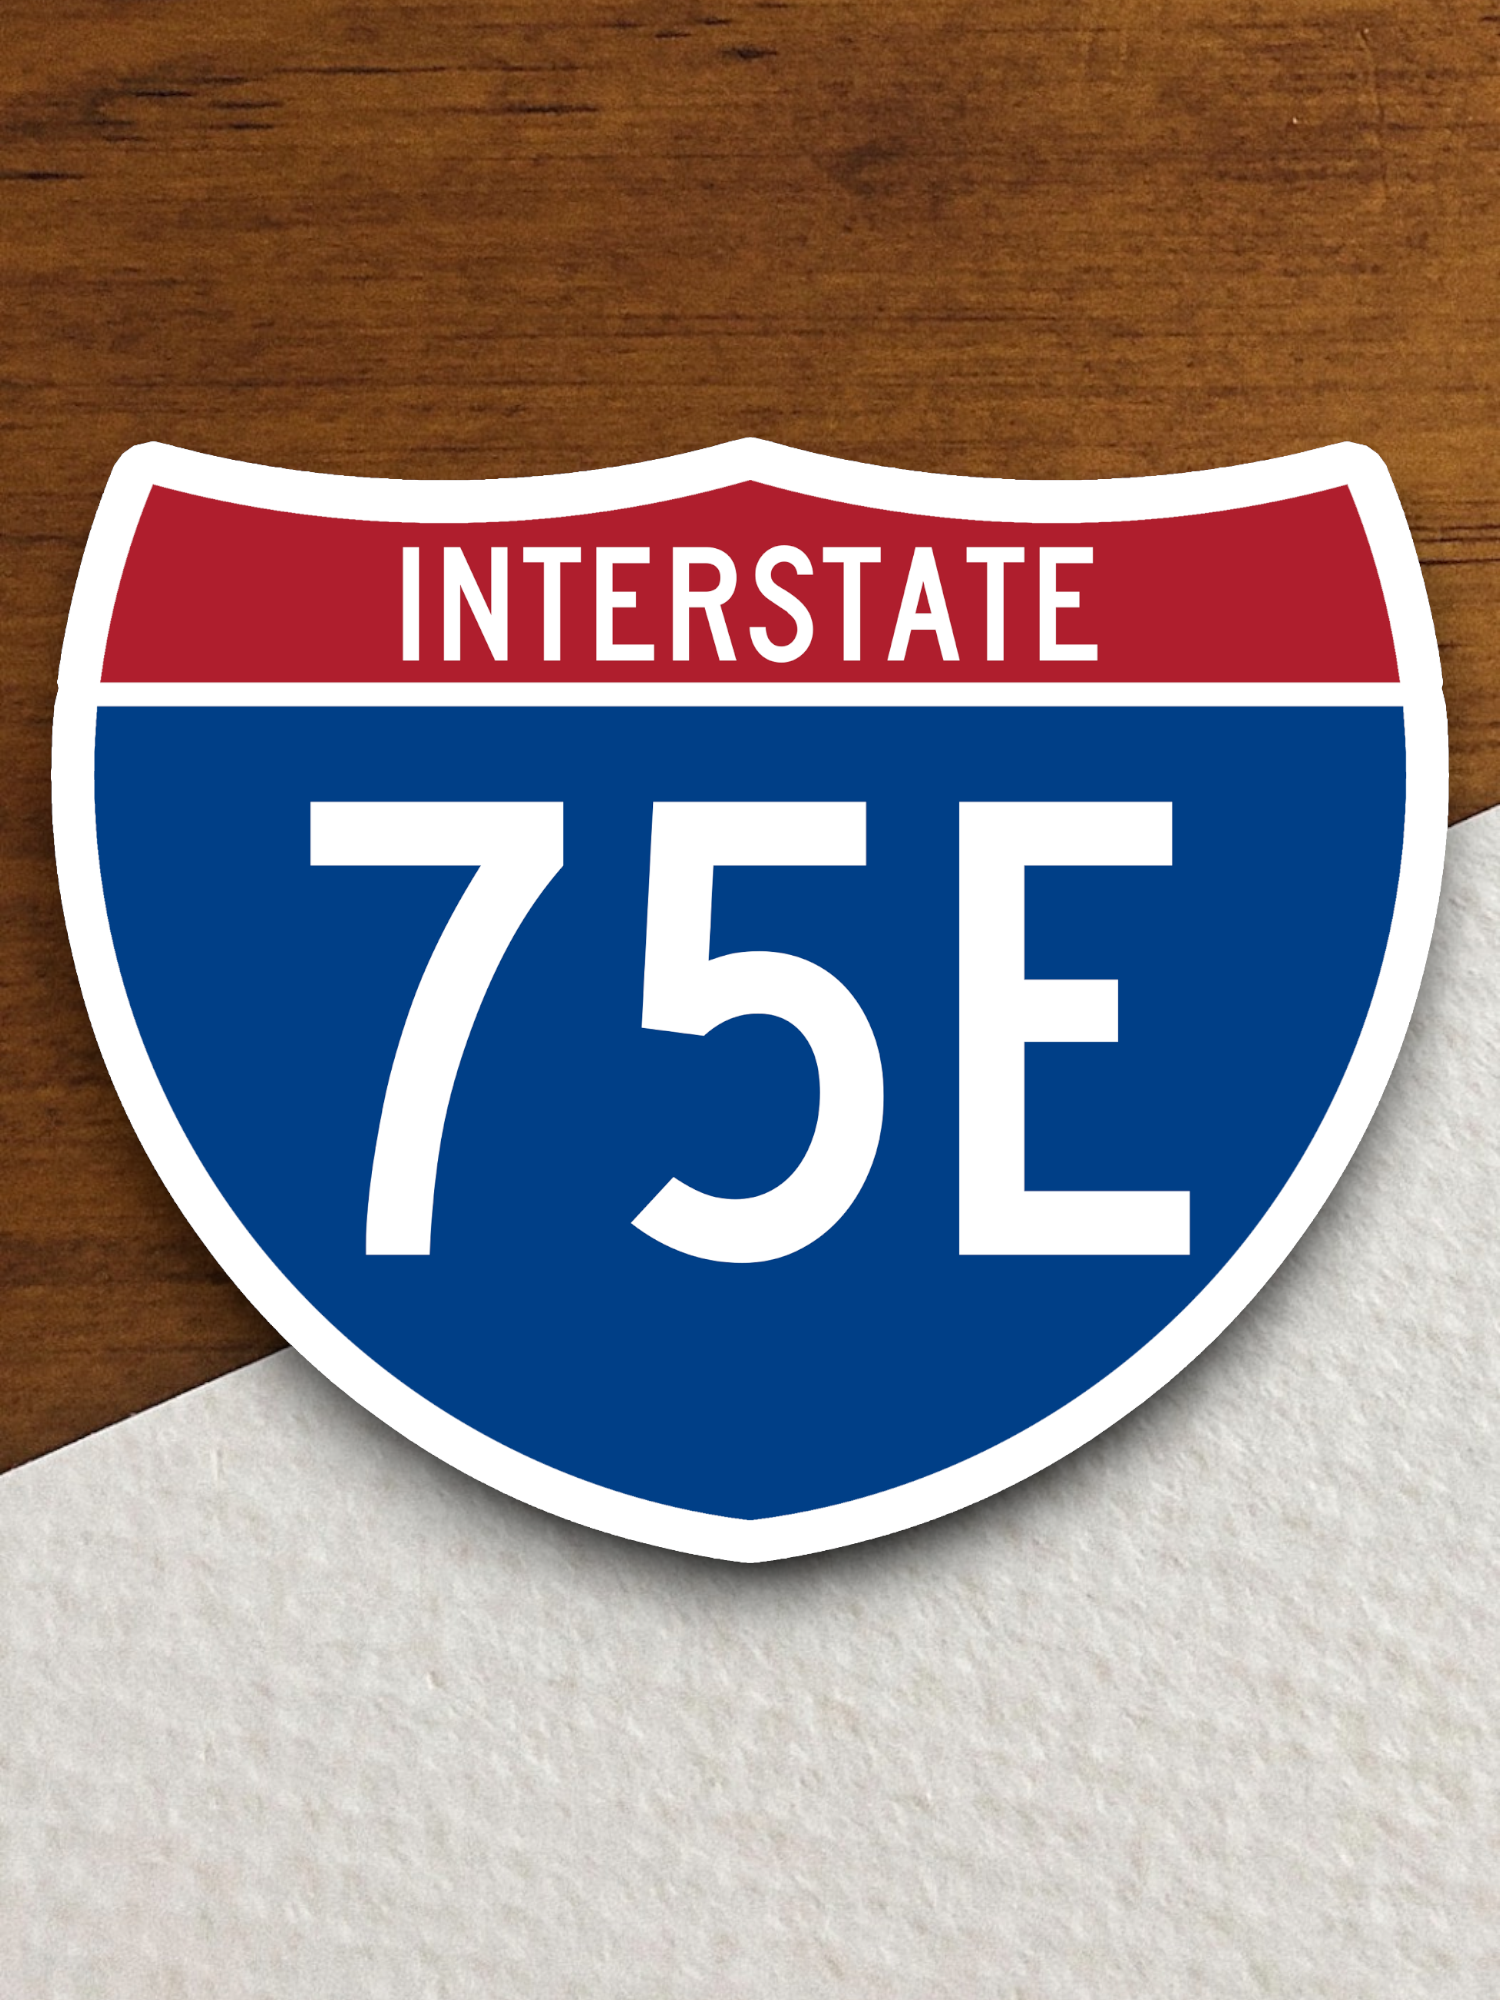 Interstate I-75E - Road Sign Sticker